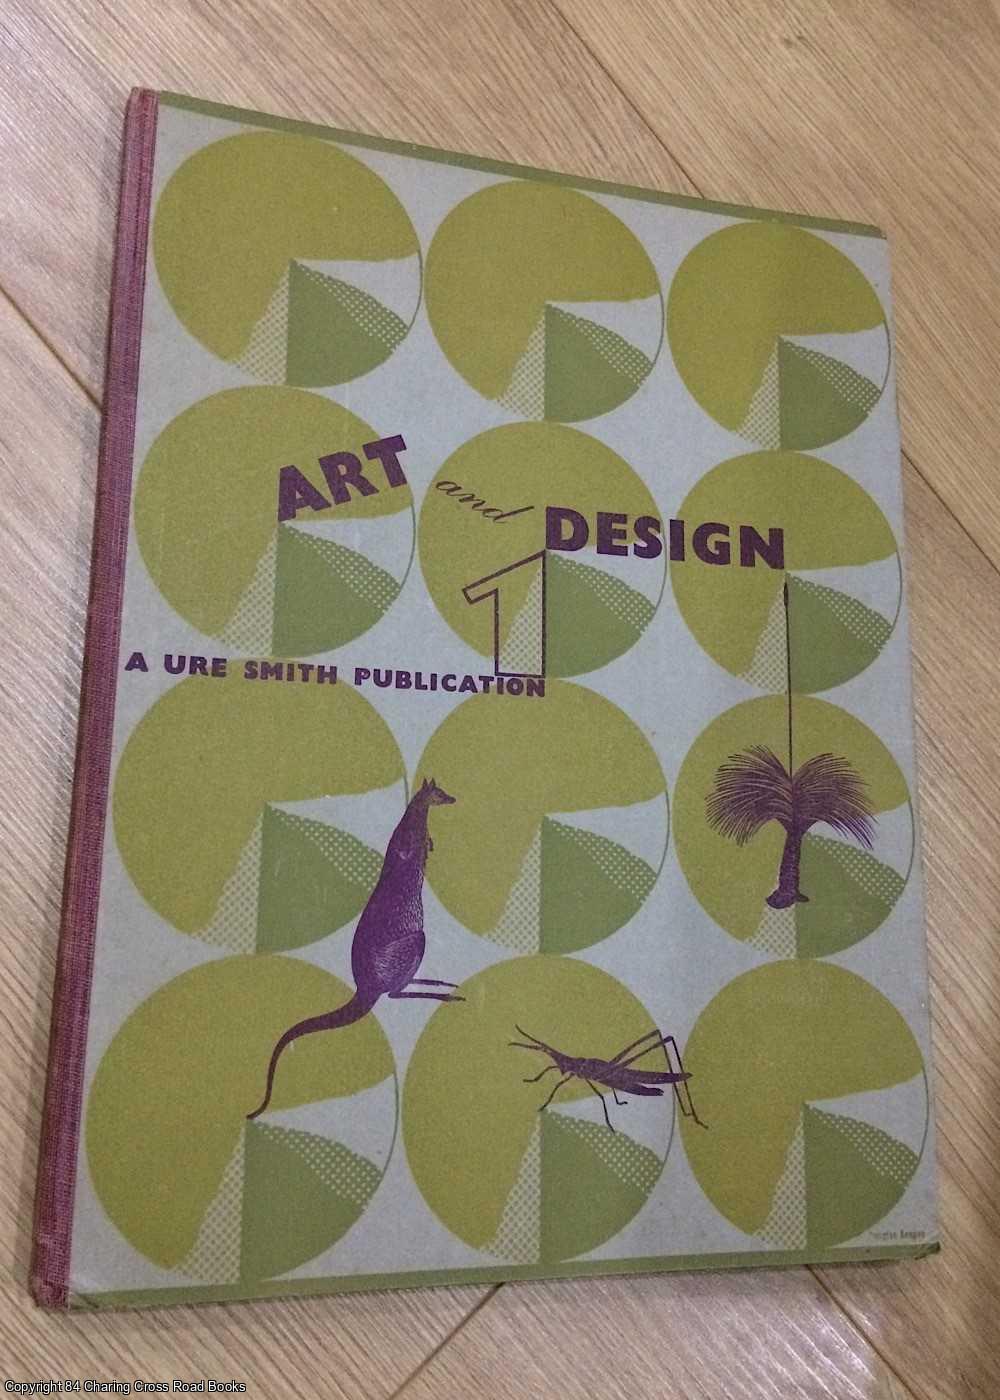 URE SMITH, Sydney and BURKE, Joseph (editors) - Art and Design 1 - A Ure Smith Publication